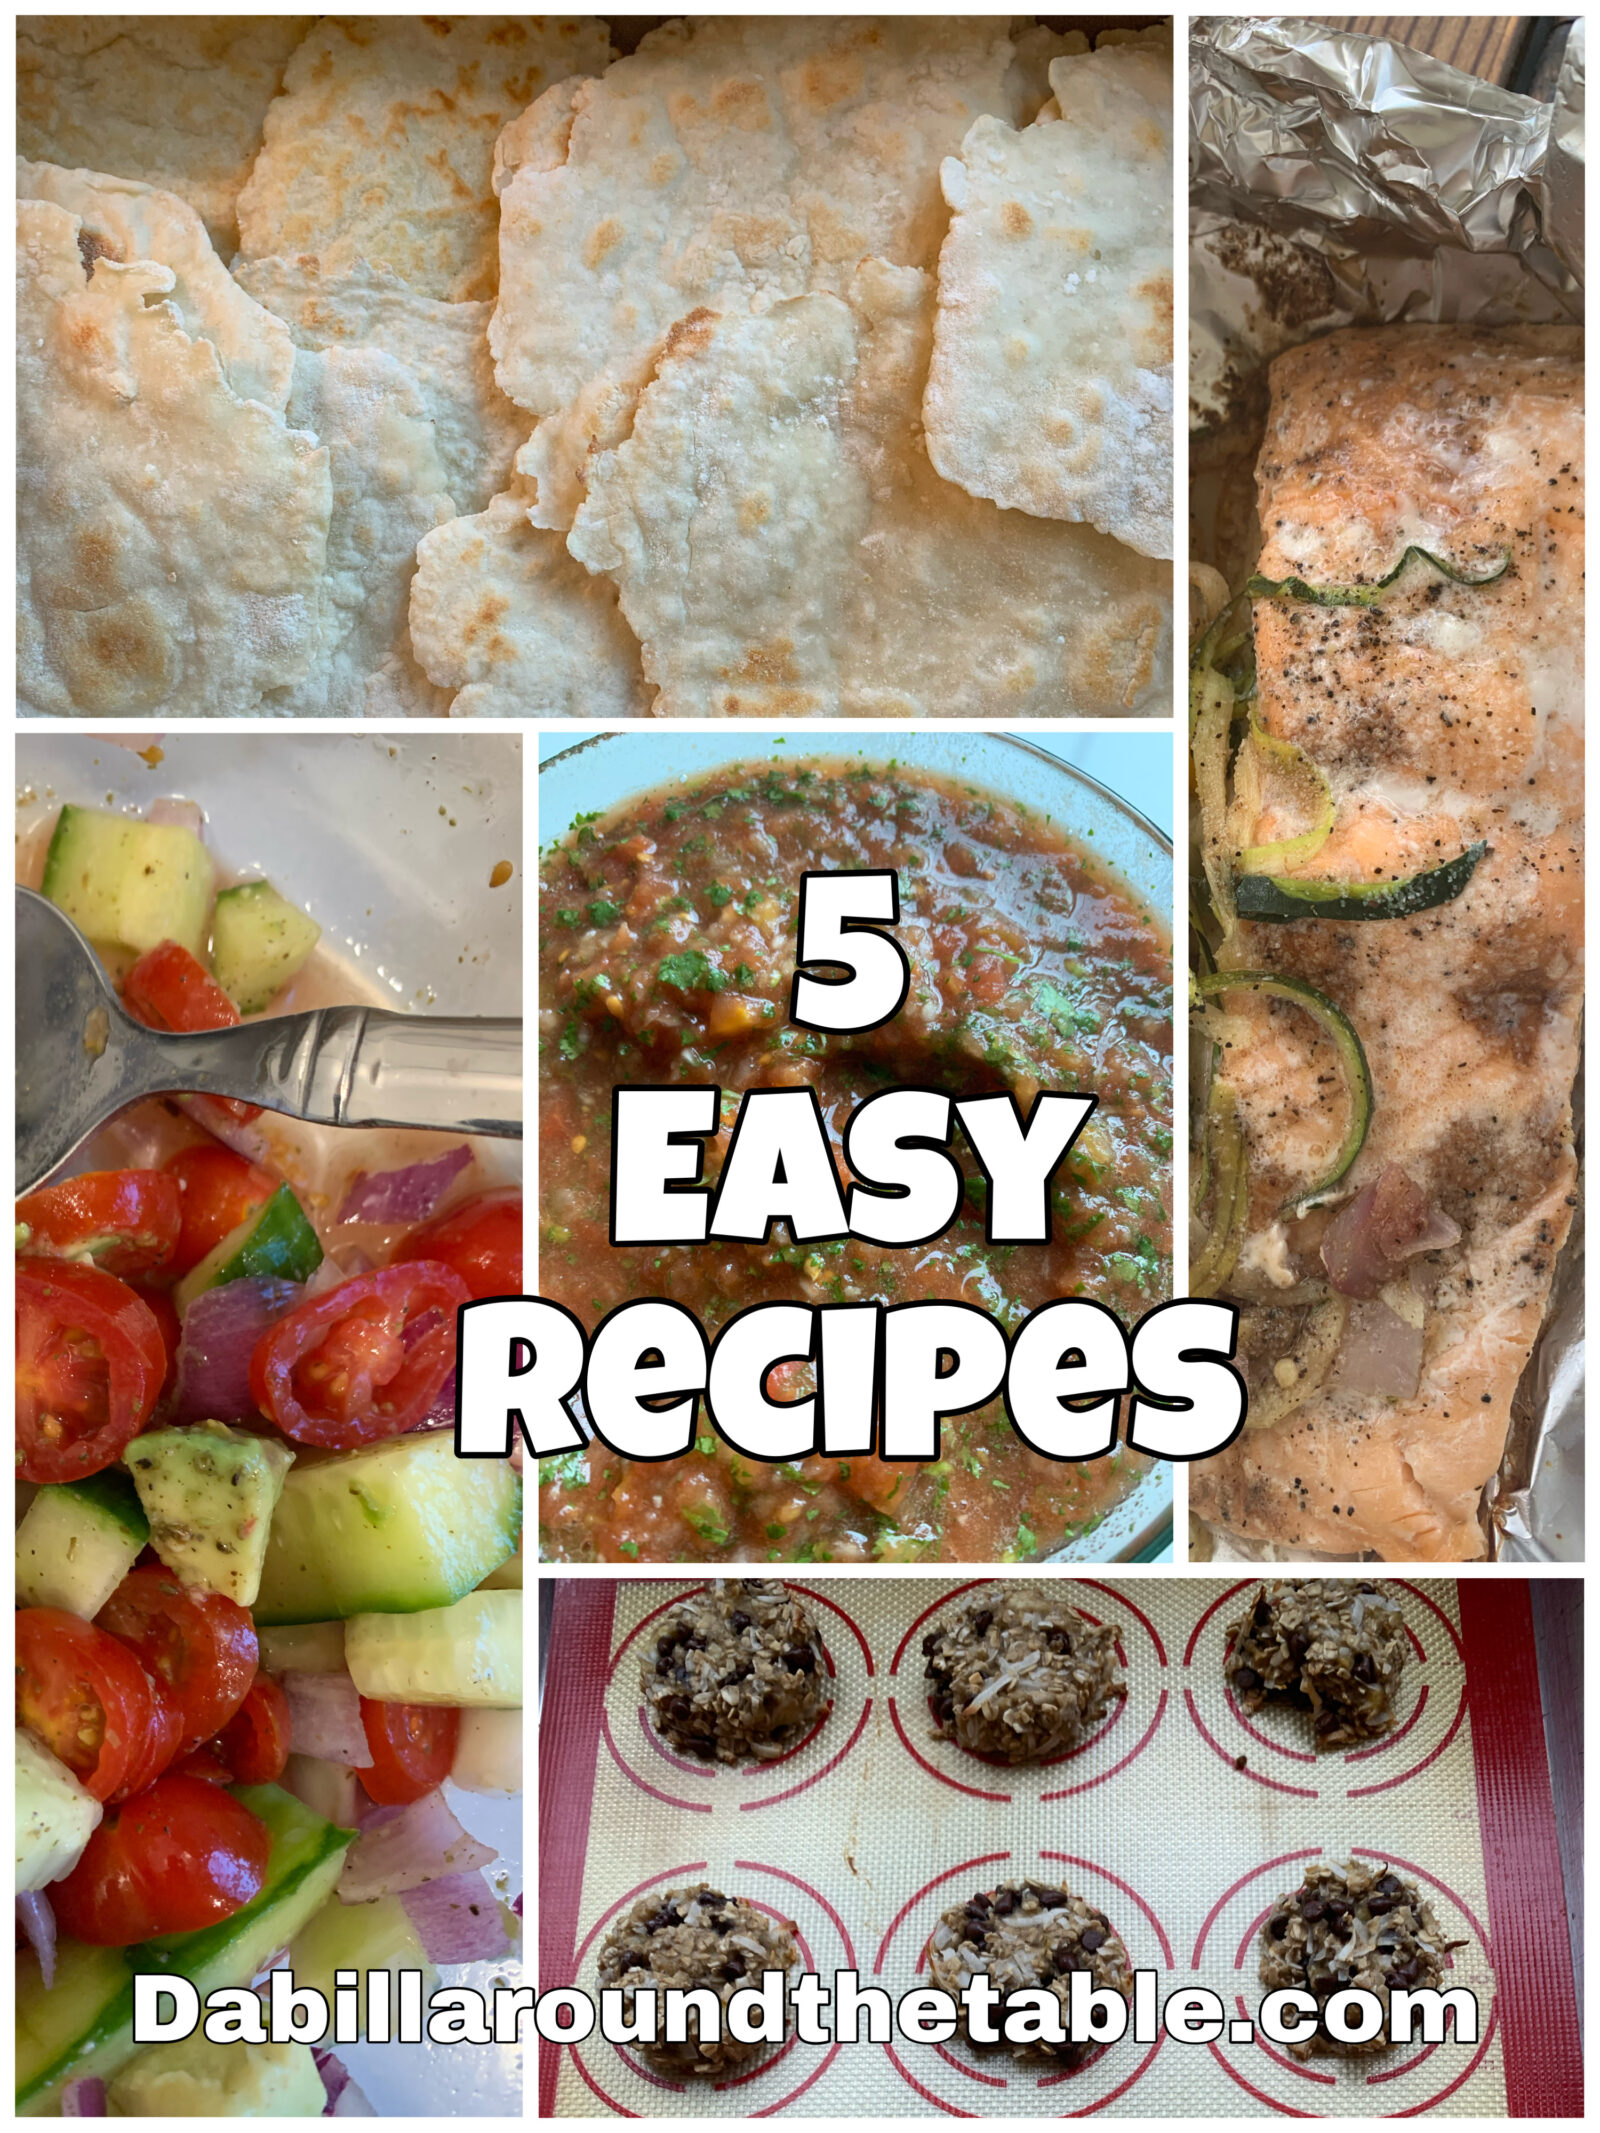 My 5 Top Easy Recipes